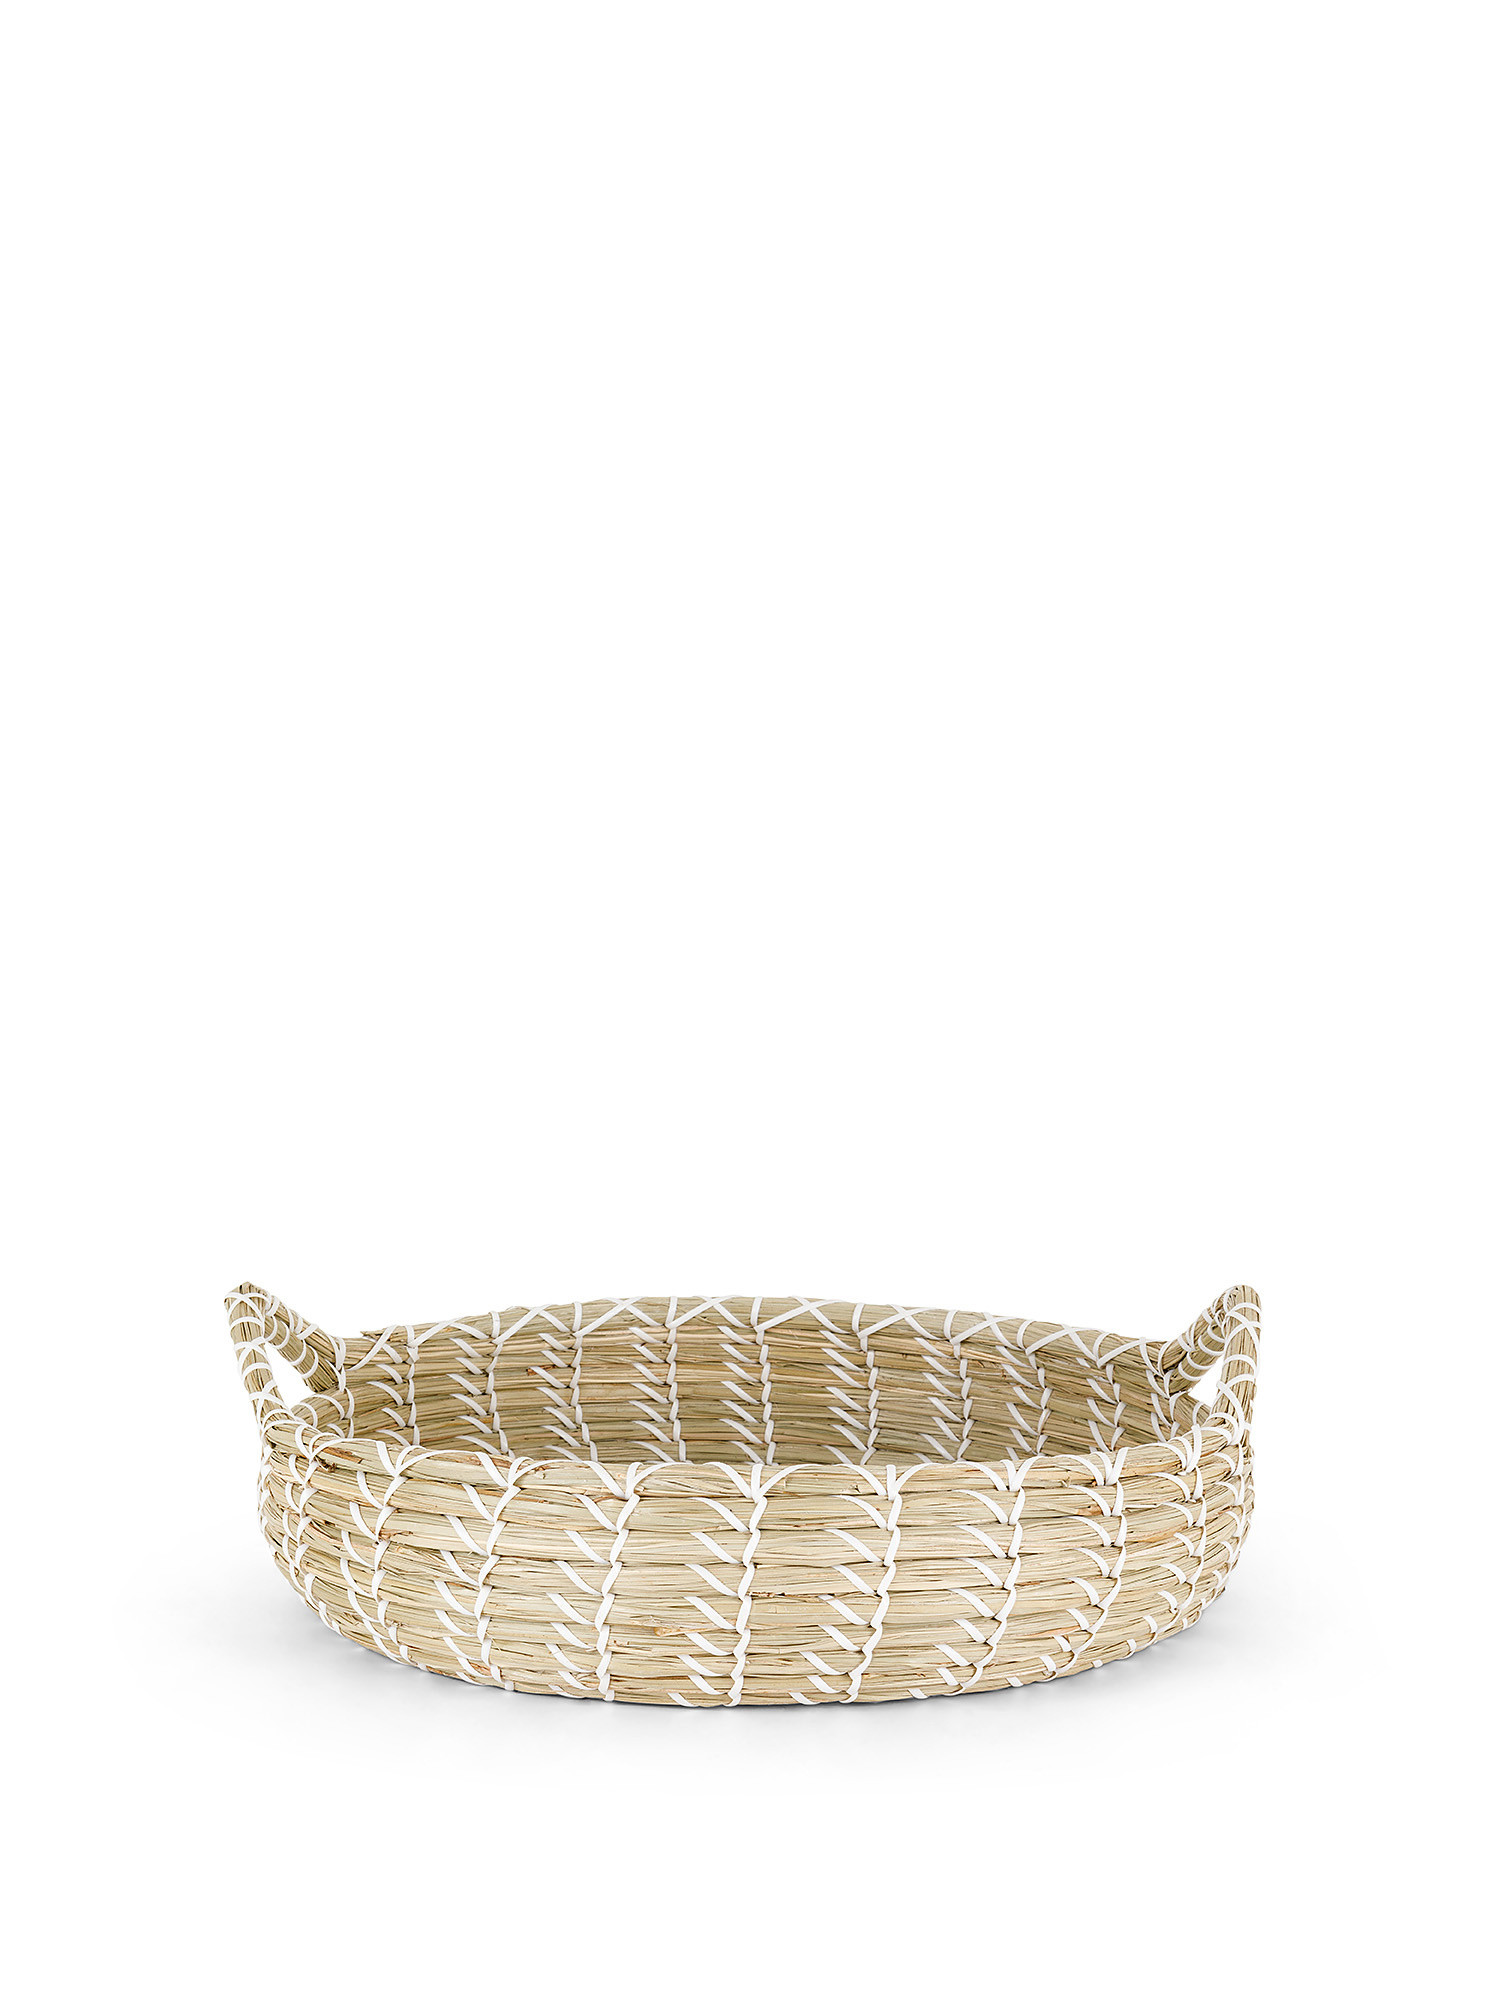 Basket 2 handles in seagrass, Beige, large image number 0